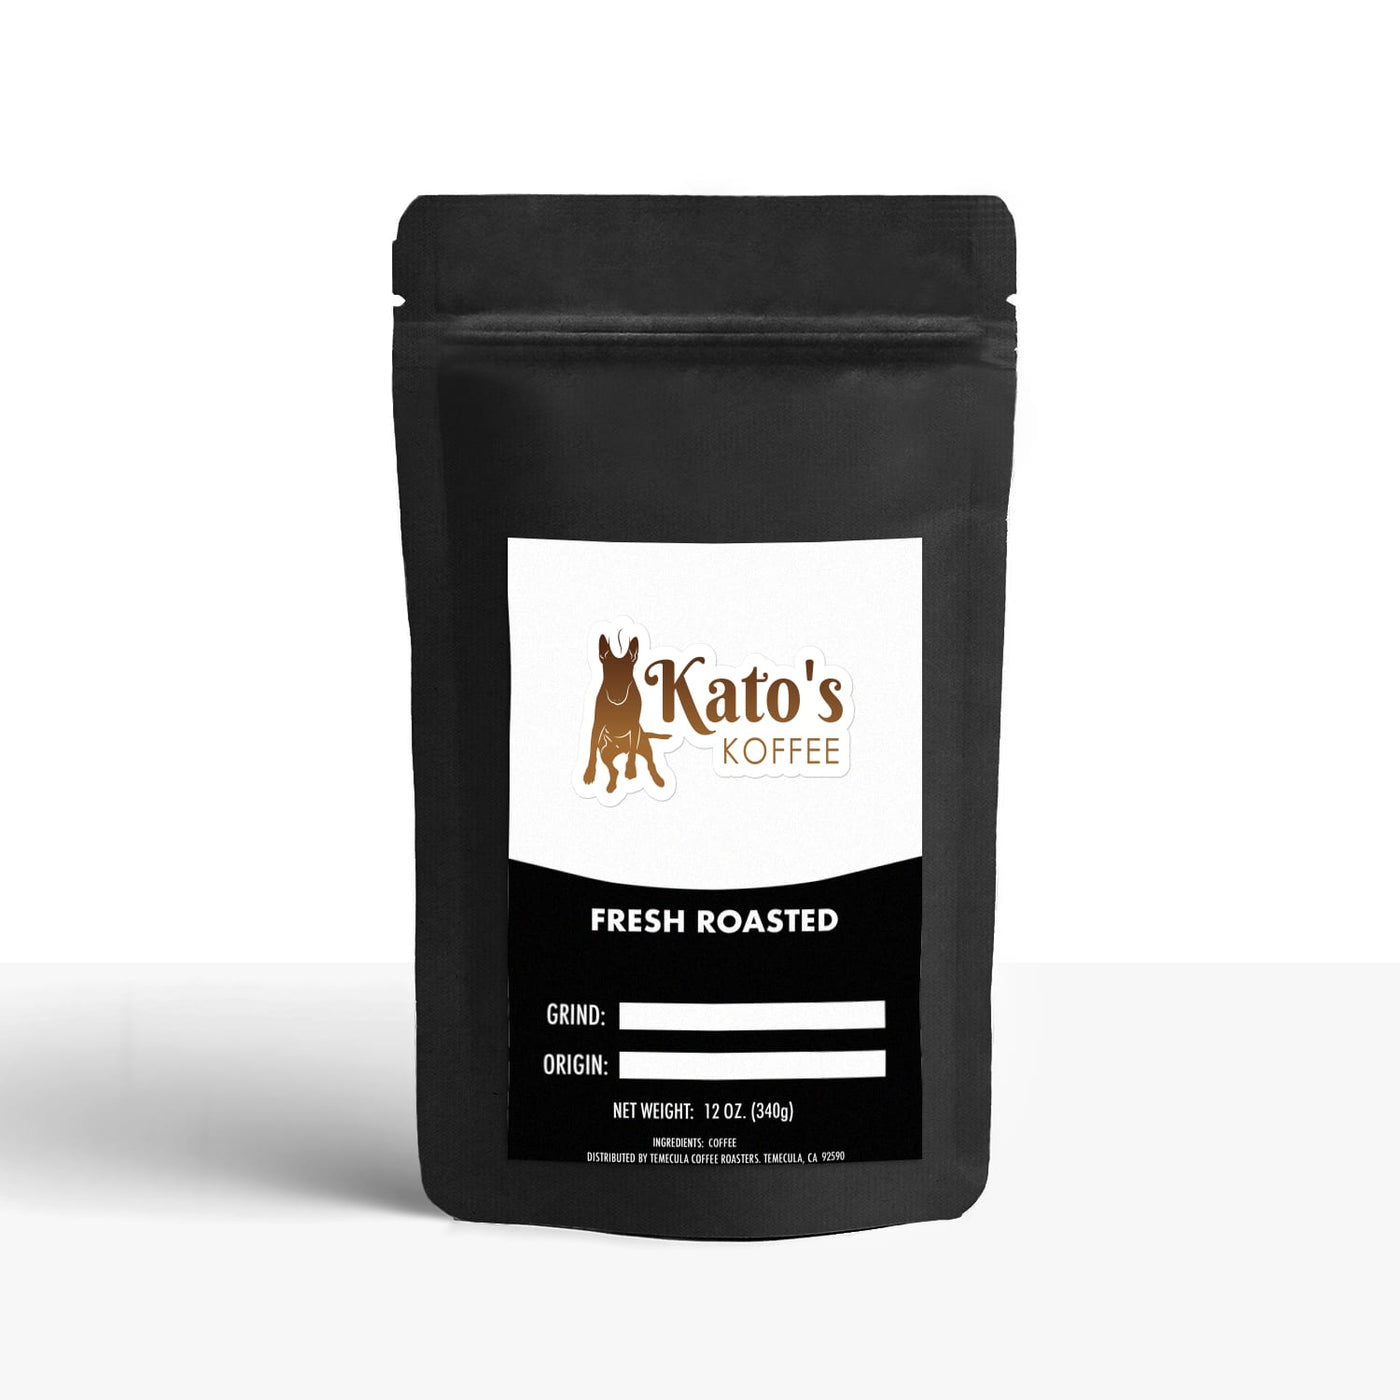 Latin American Blend - Kato's Koffee